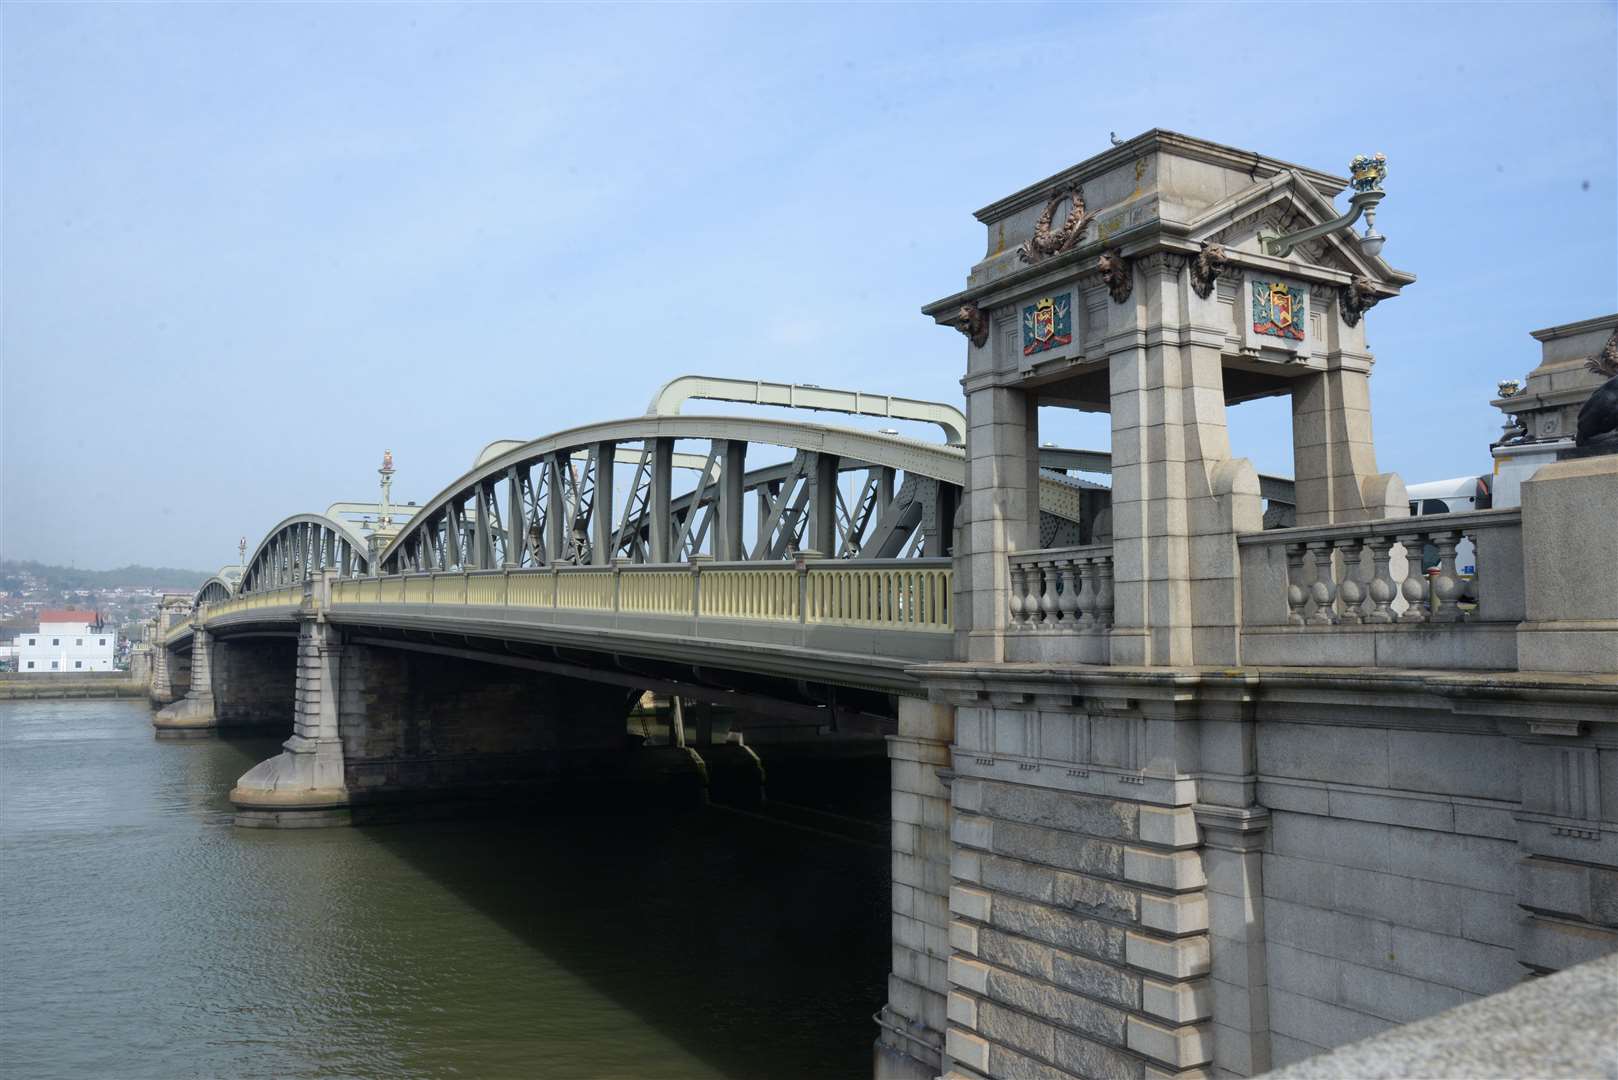 Rochester Bridge has a long history